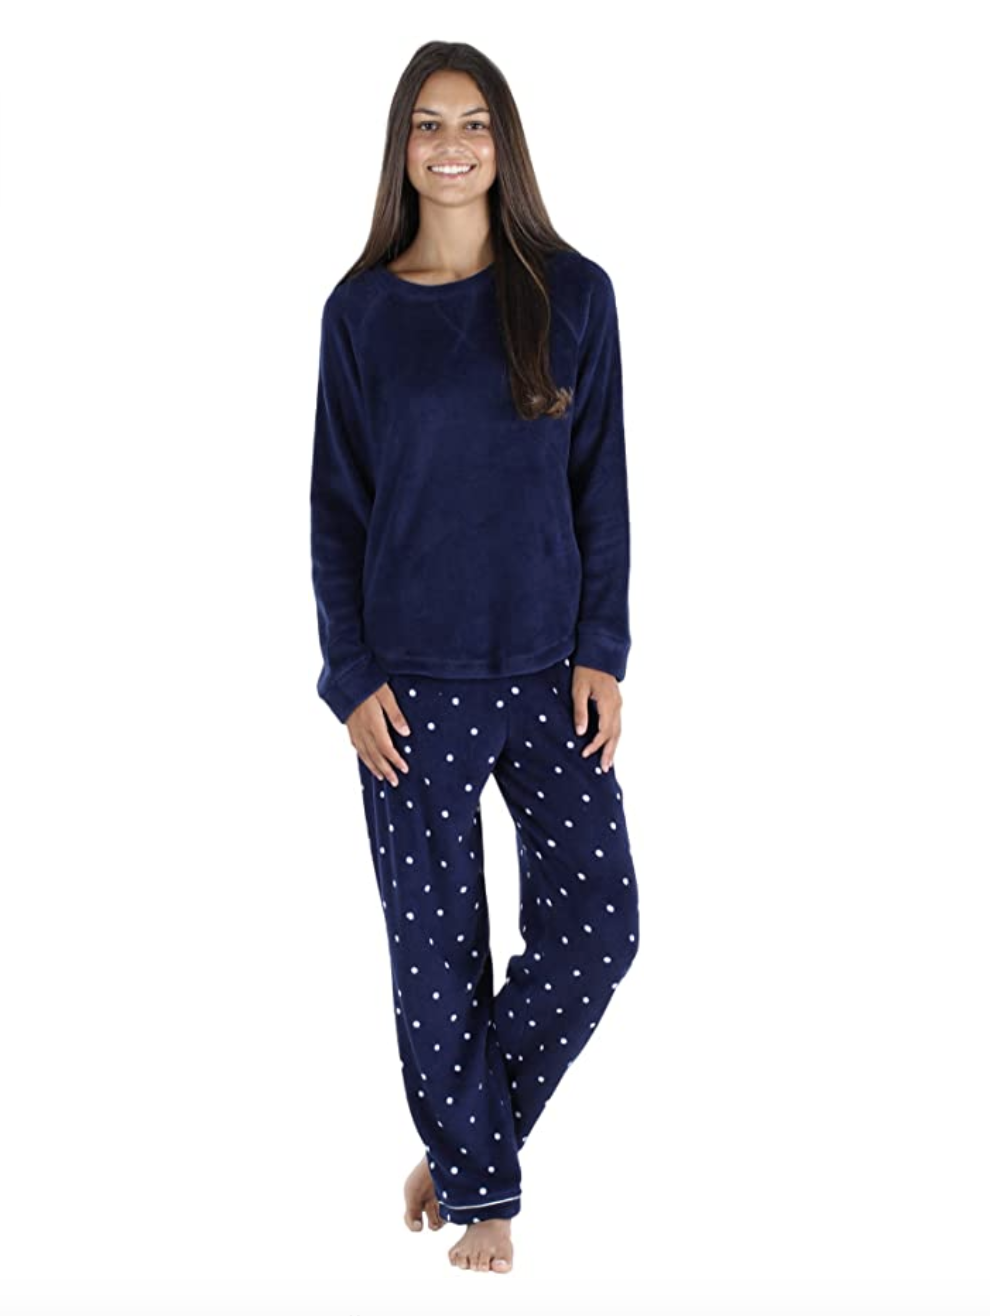 Mens Pyjamas Set Suit Loungewear Nightwear Sleepwear Two Piece PJ Night Suit Short Sleeve top & Pants